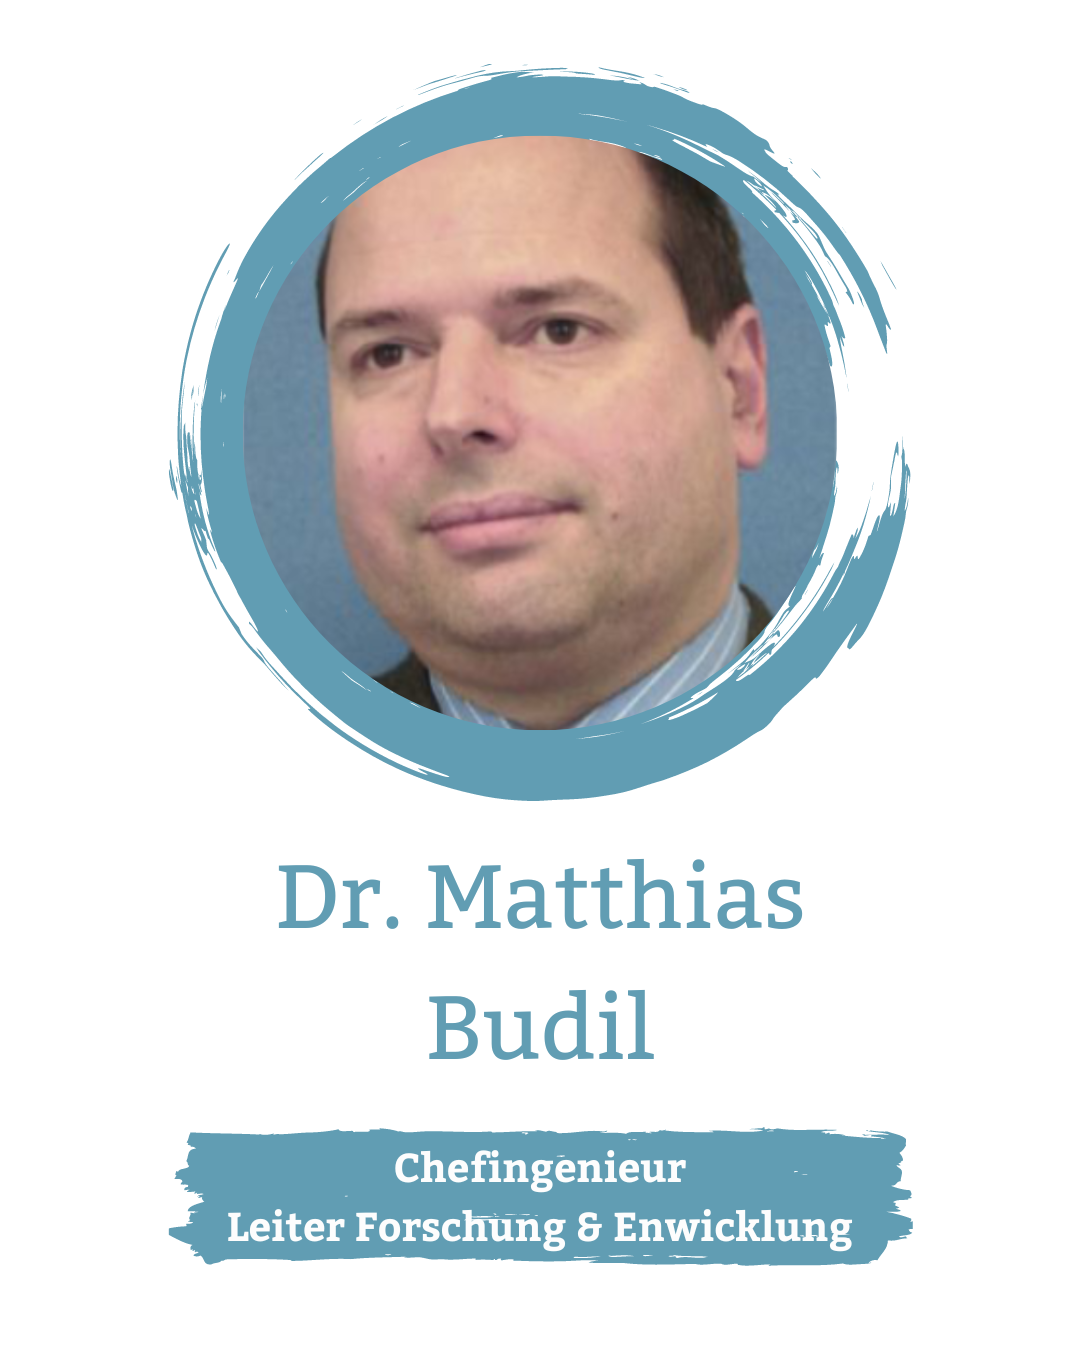 Dr. Matthias Budil